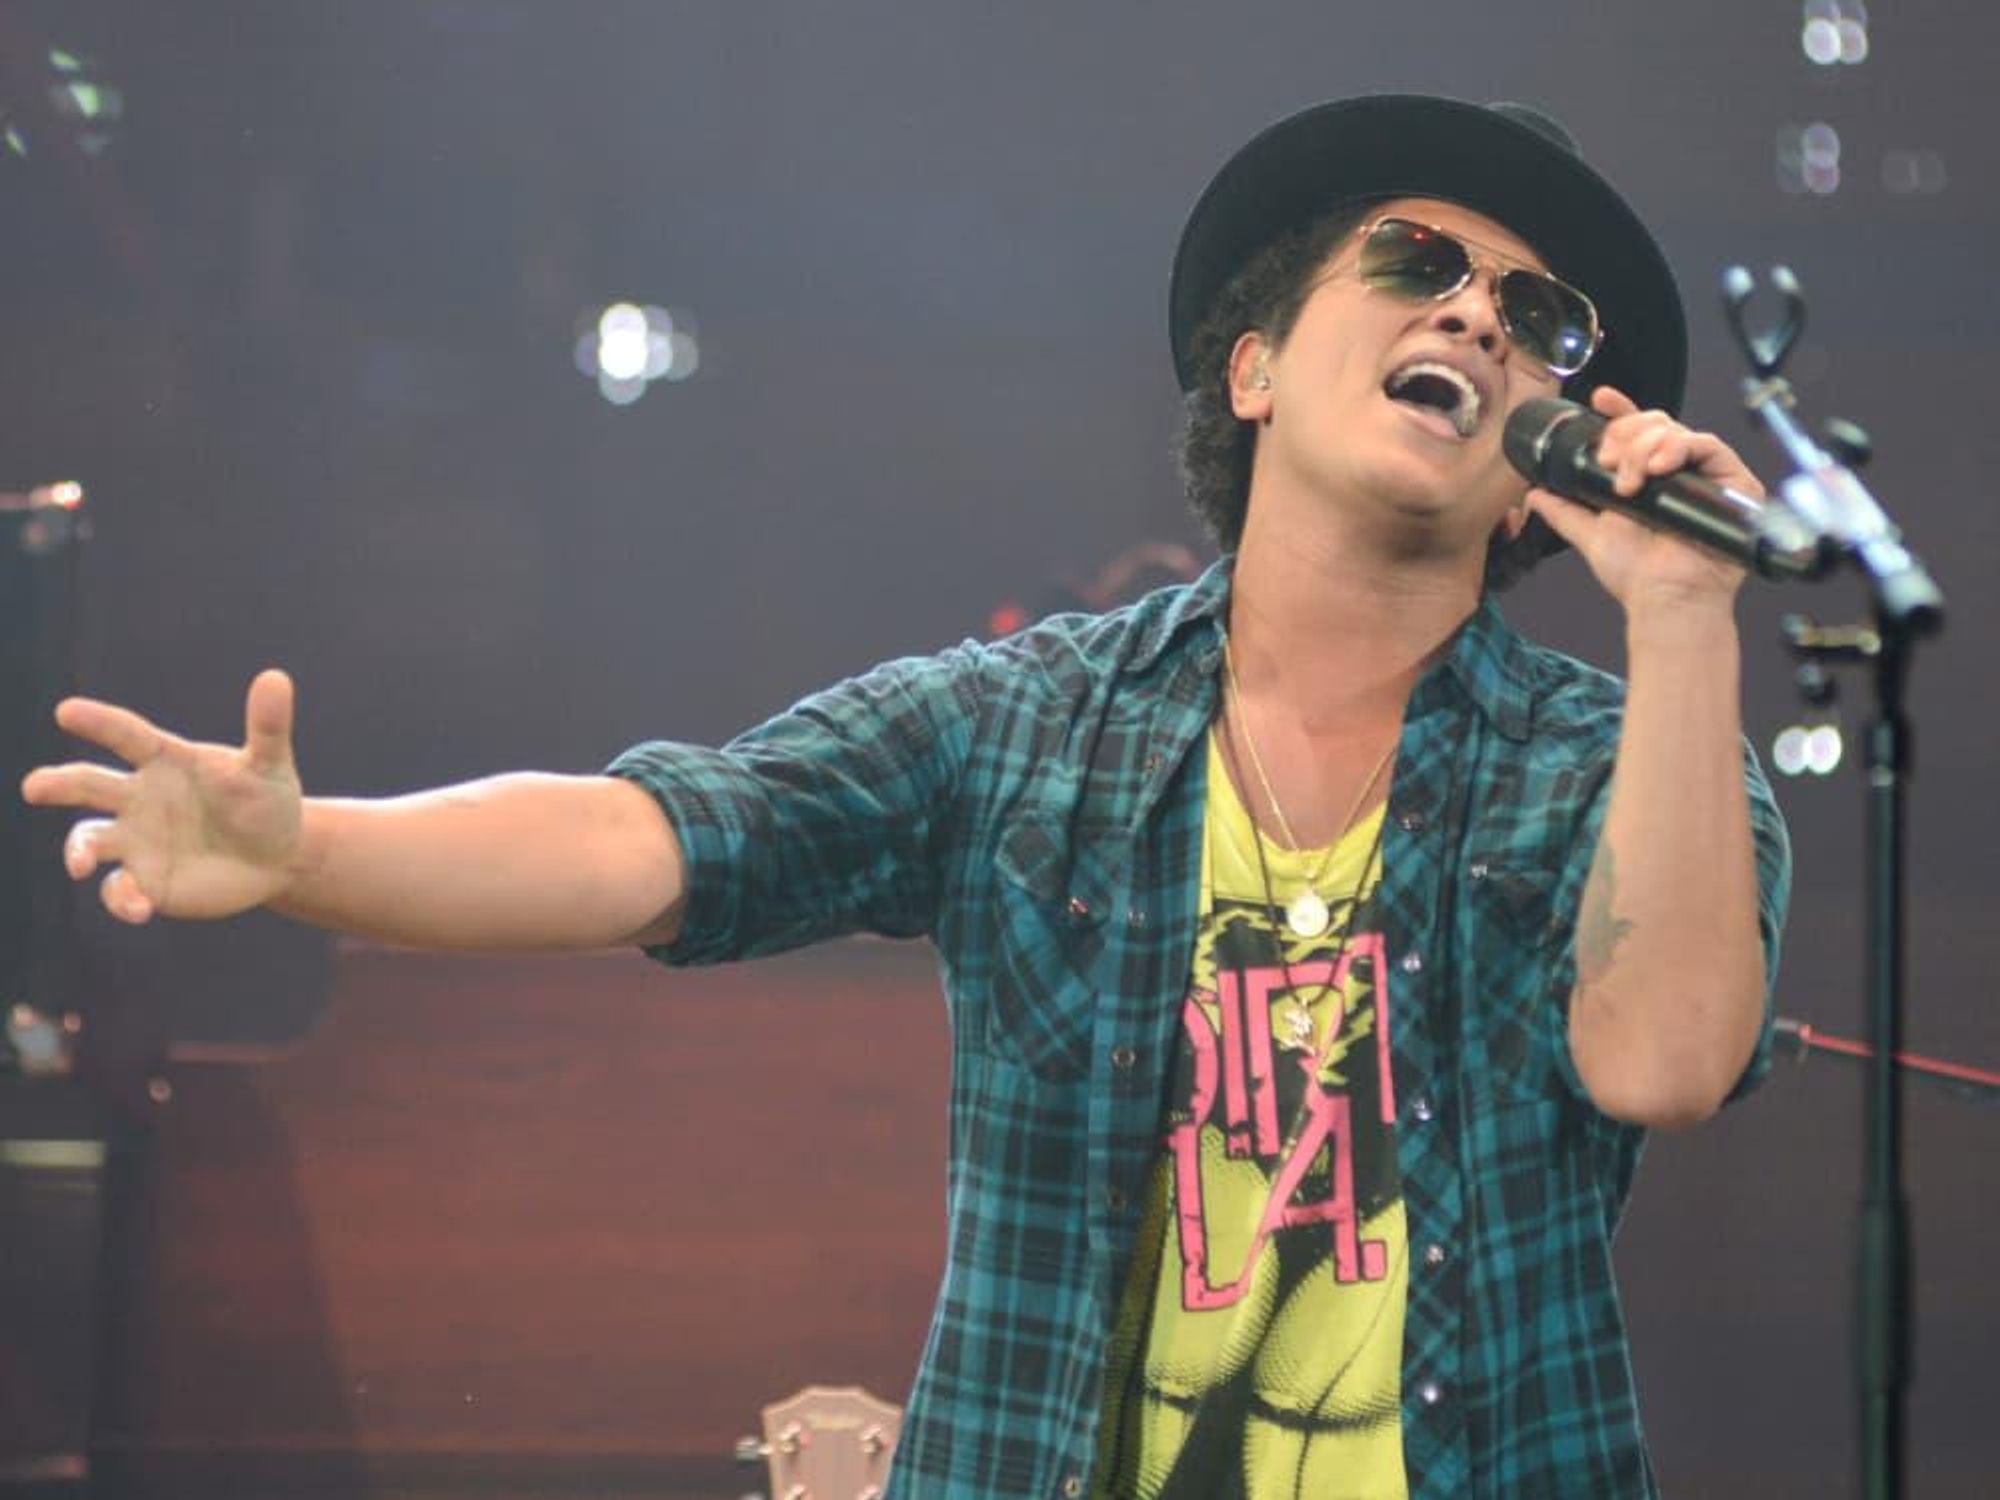 0007, RodeoHouston, Bruno Mars concert, March 2013